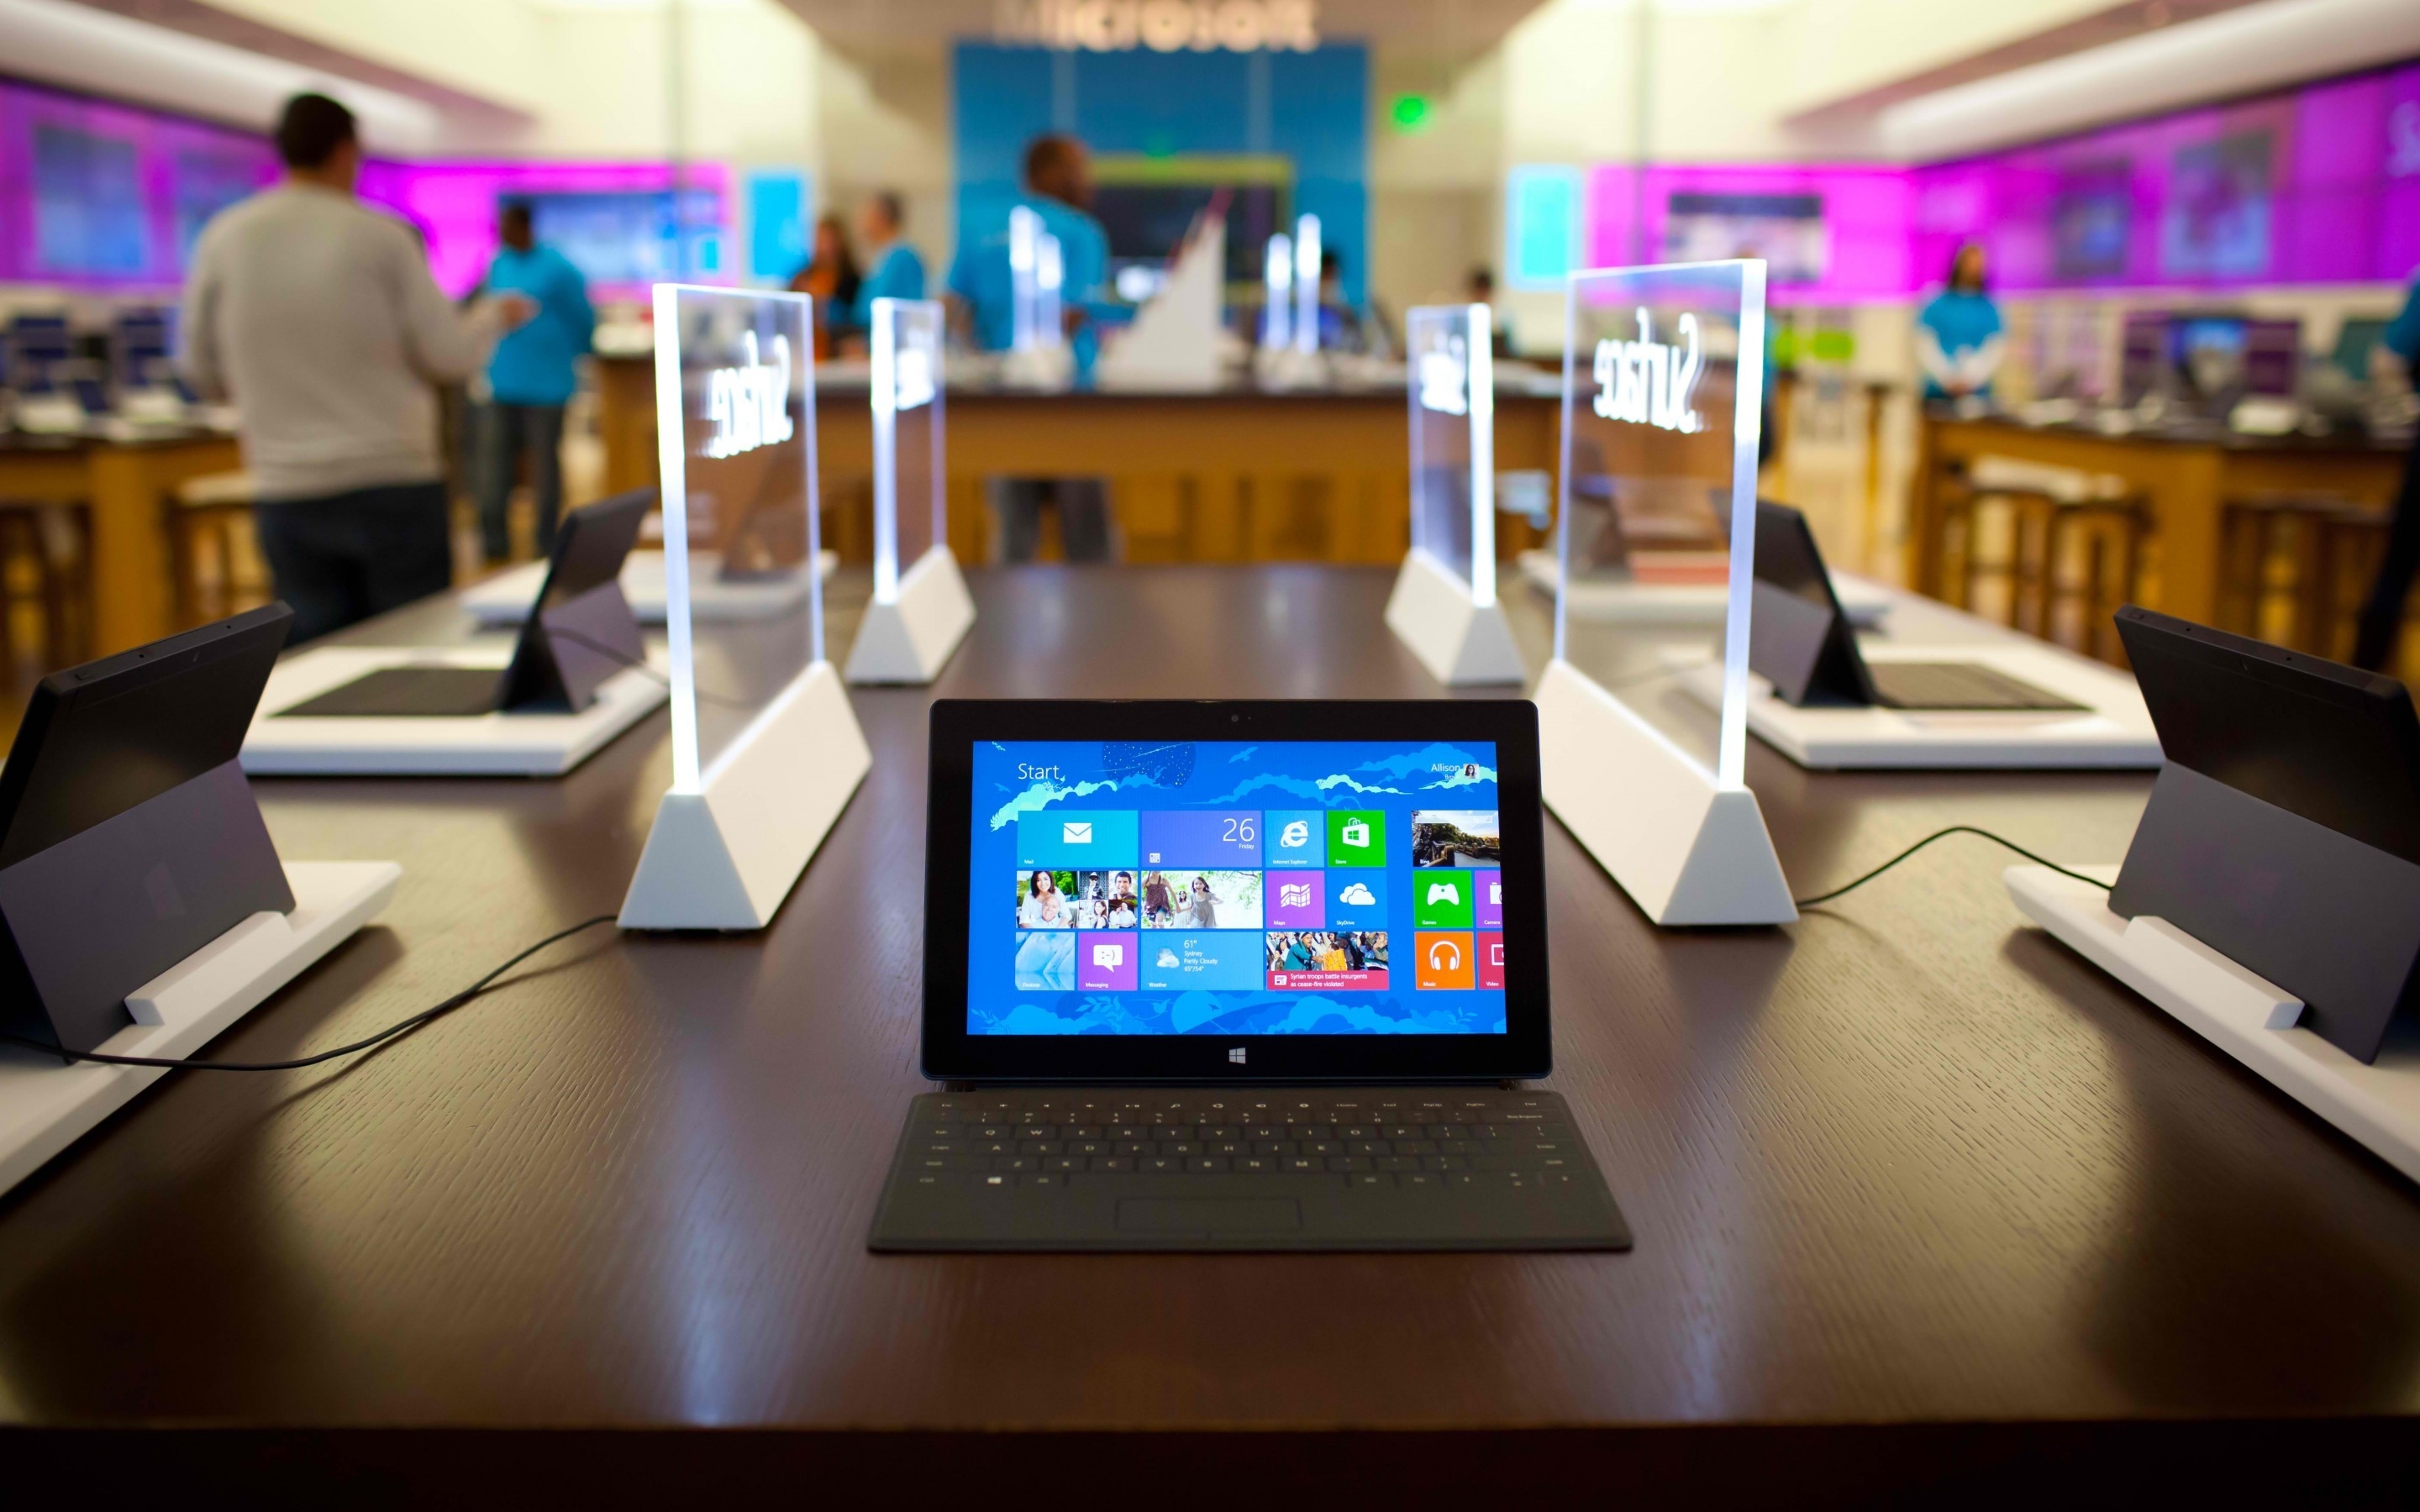 Microsoft Surface Pro Windows 8 Tablet Wallpaper - Microsoft Store Bethesda , HD Wallpaper & Backgrounds